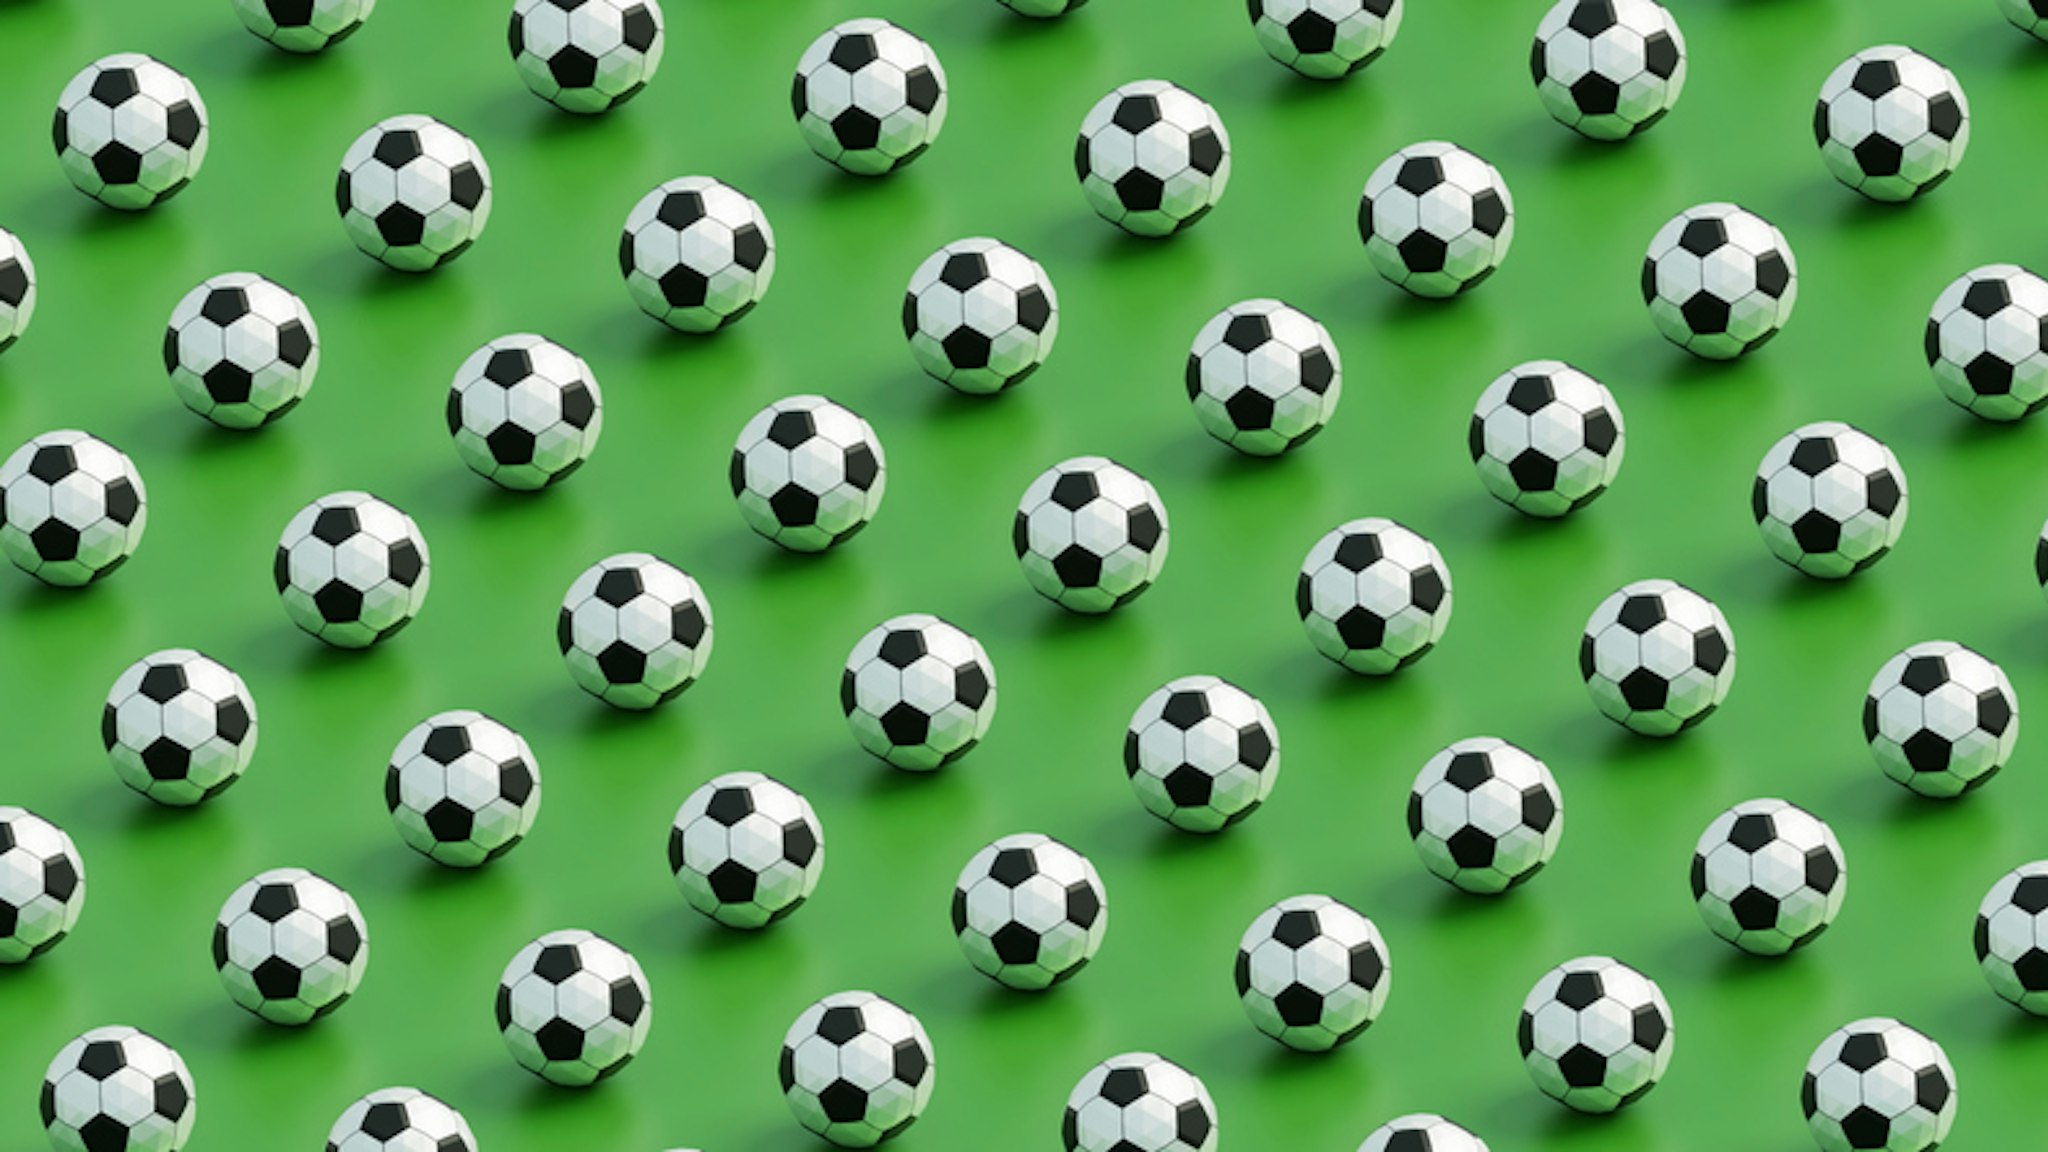 Seamless pattern of soccer balls filling the frame